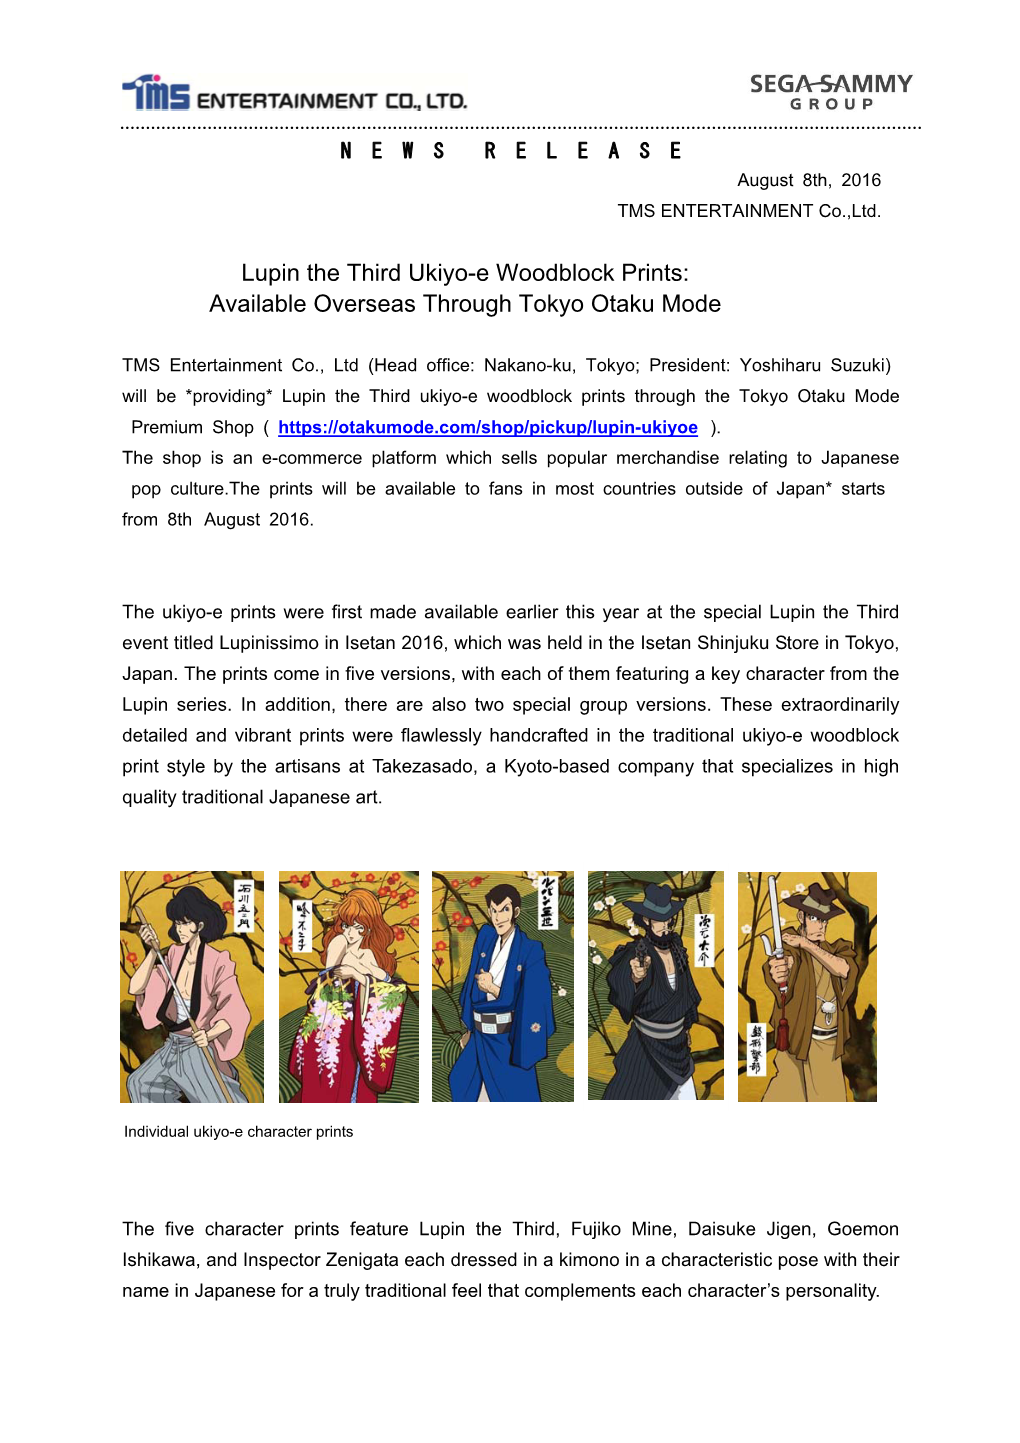 Lupin the Third Ukiyo-E Woodblock Prints: Available Overseas Through Tokyo Otaku Mode